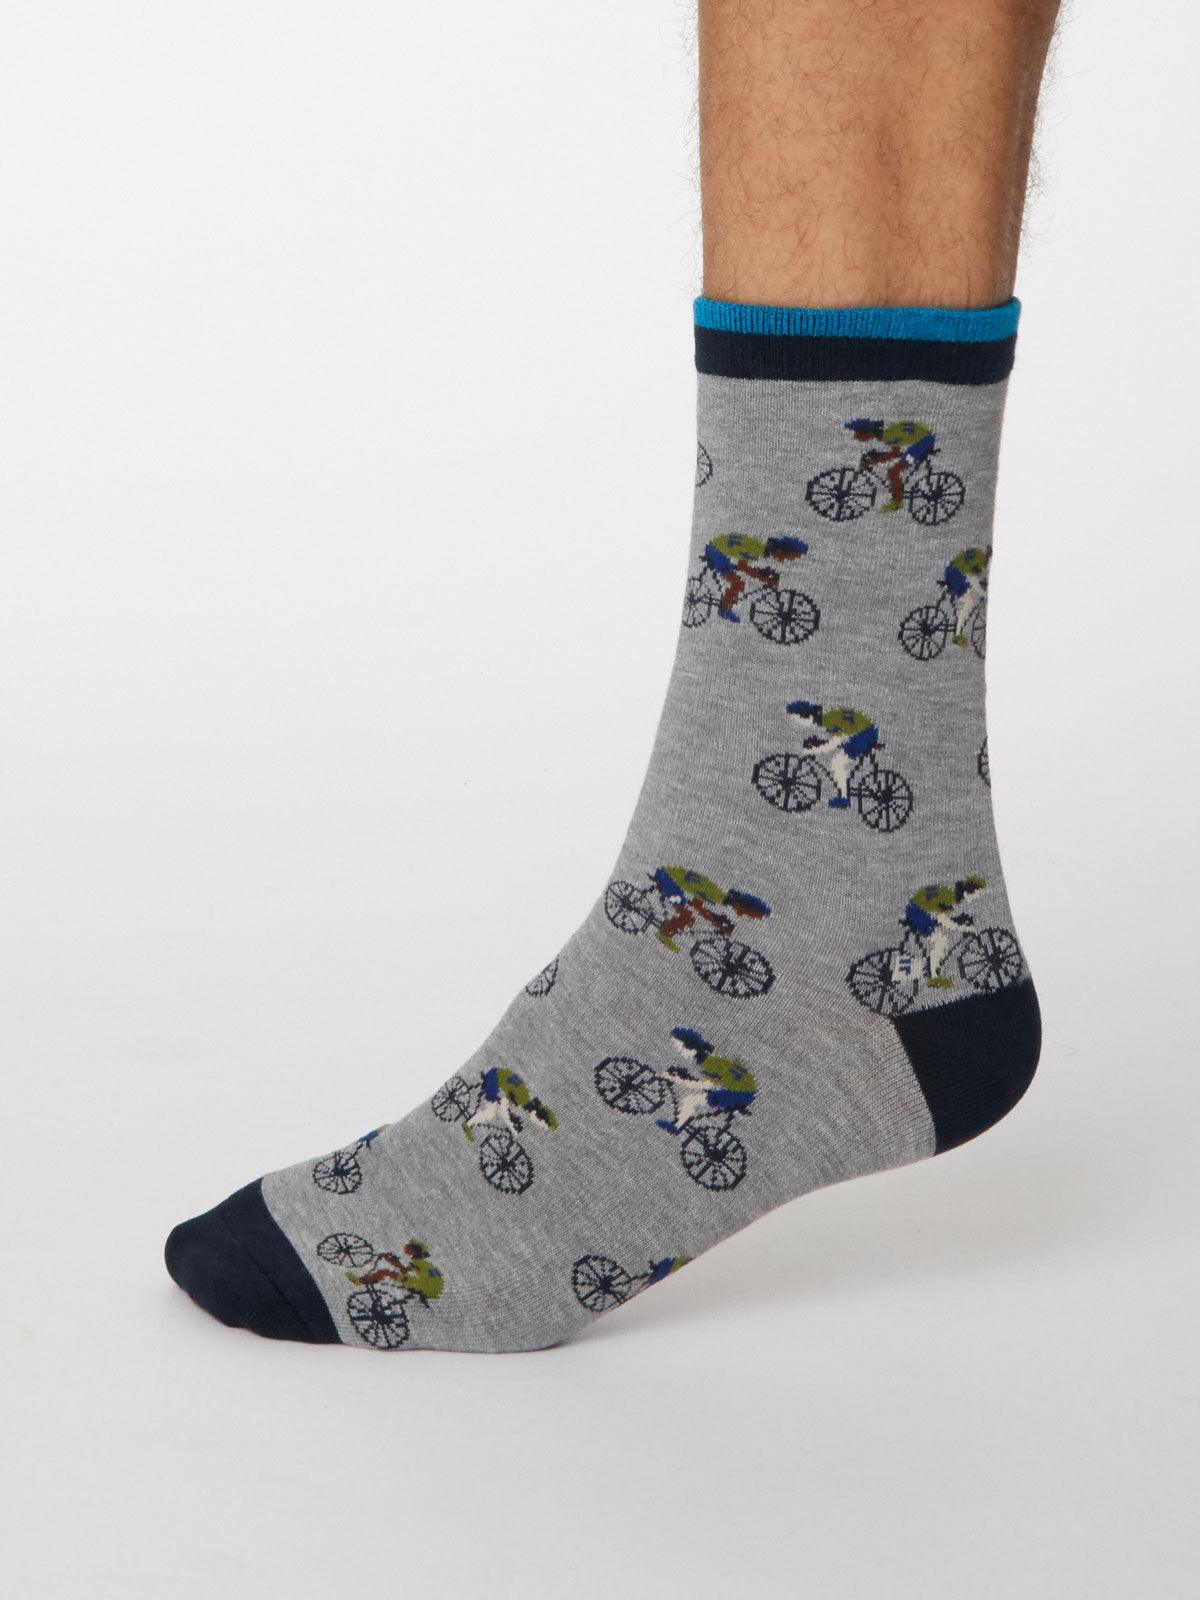 Garra De Bici Socks - Mid Grey Marle - Thought Clothing UK